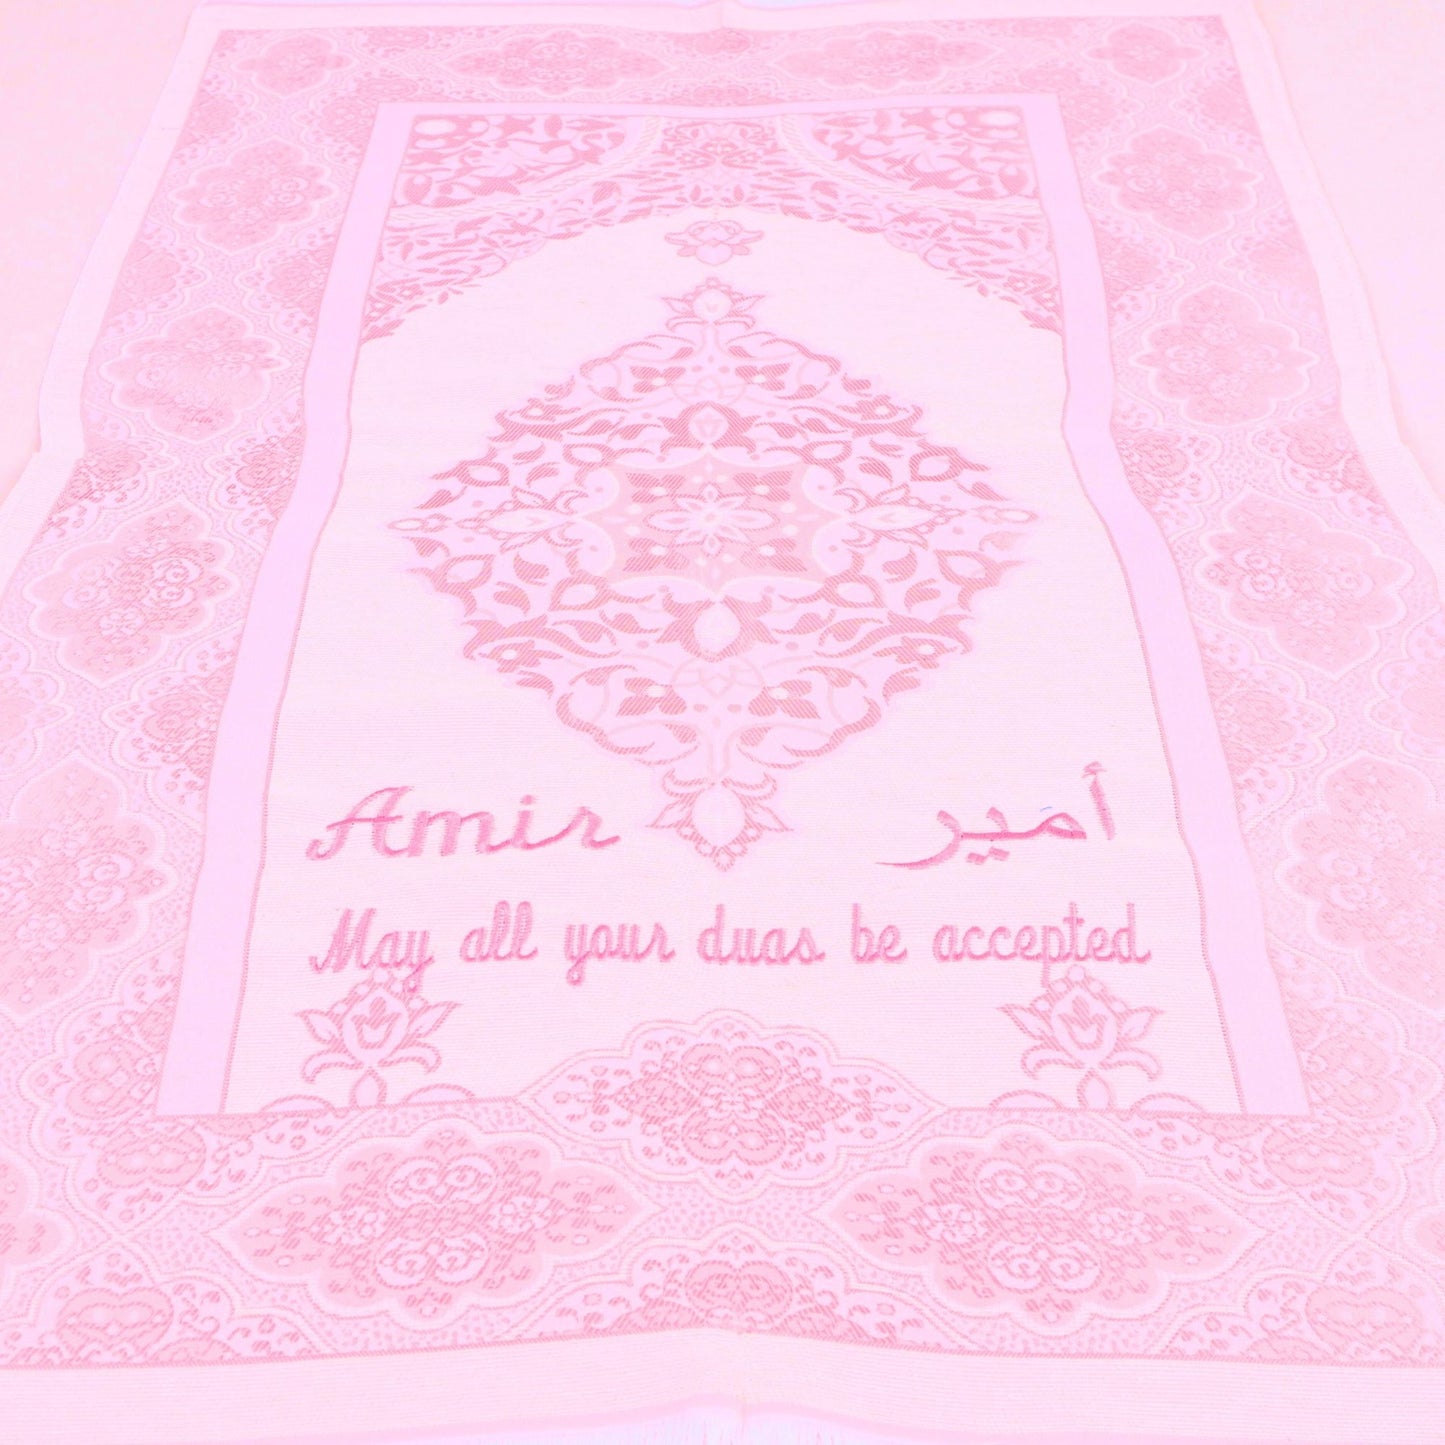 Personalized Travel Prayer Mat Quran Tasbeeh Islamic Muslim Gift Set